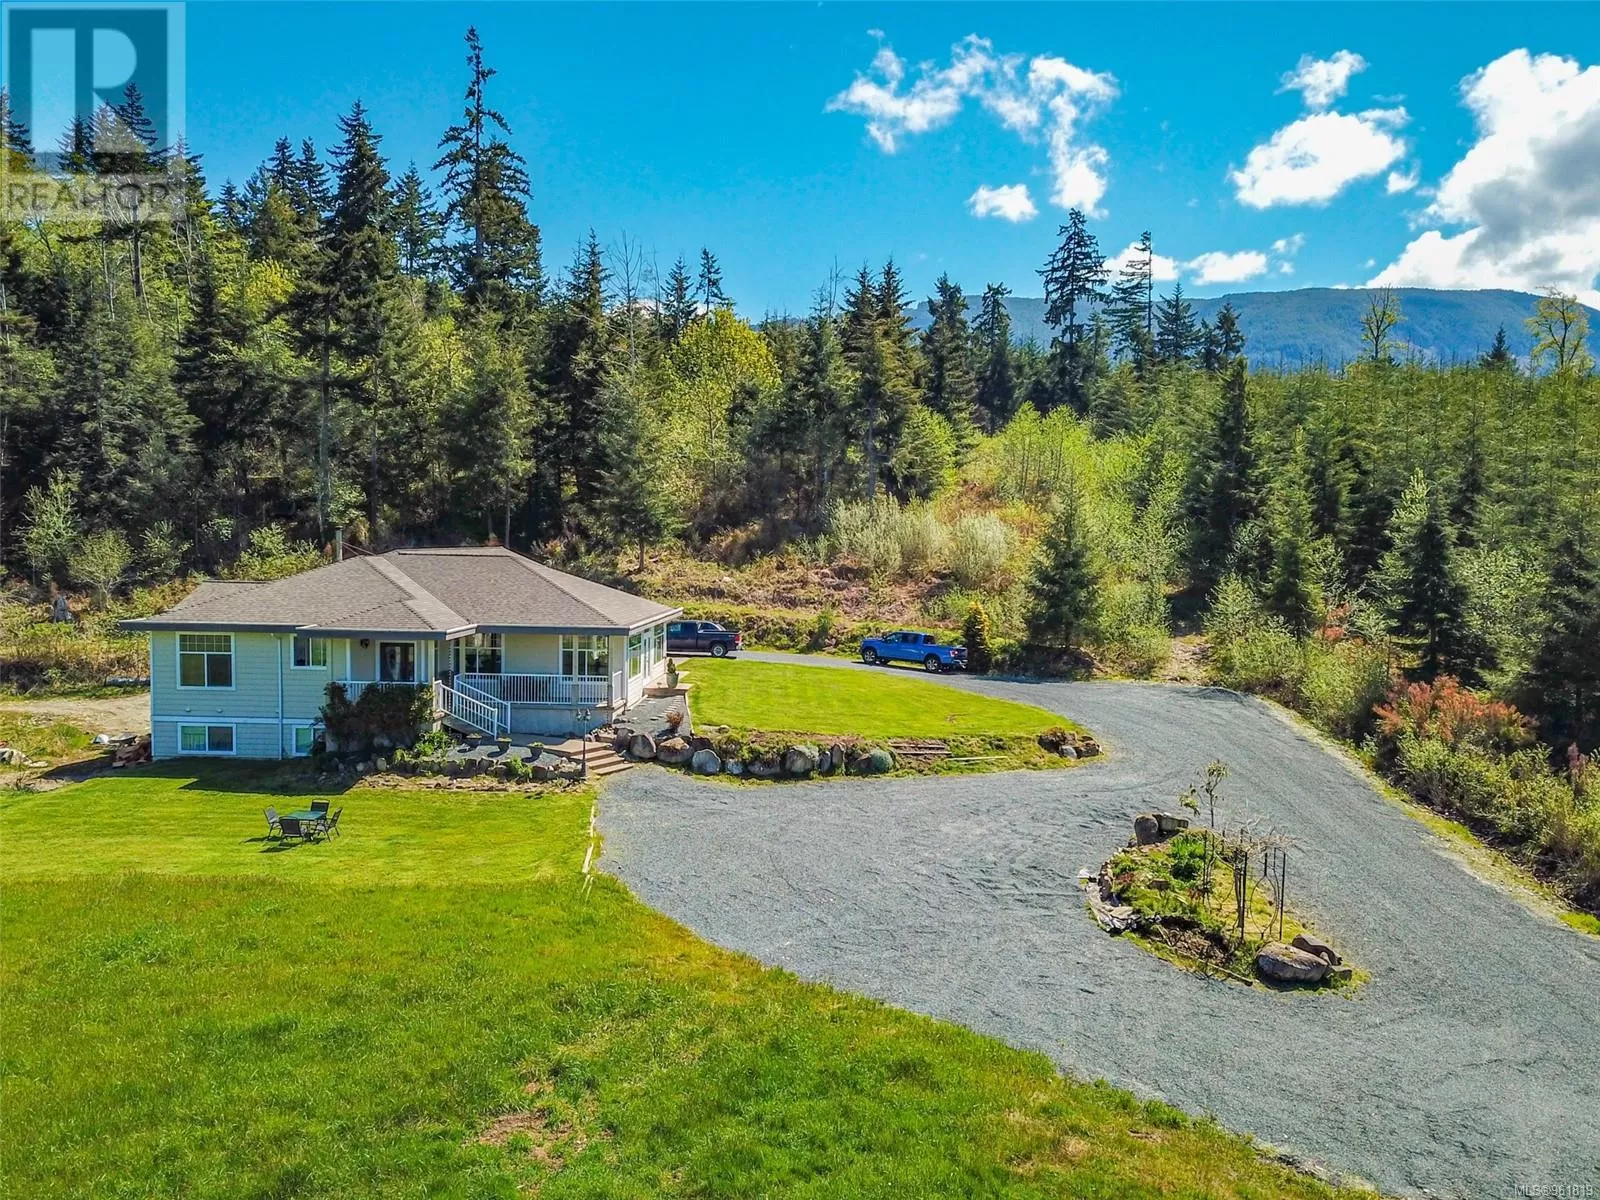 House for rent: 670 Franklin River Rd, Port Alberni, British Columbia V9Y 7M6